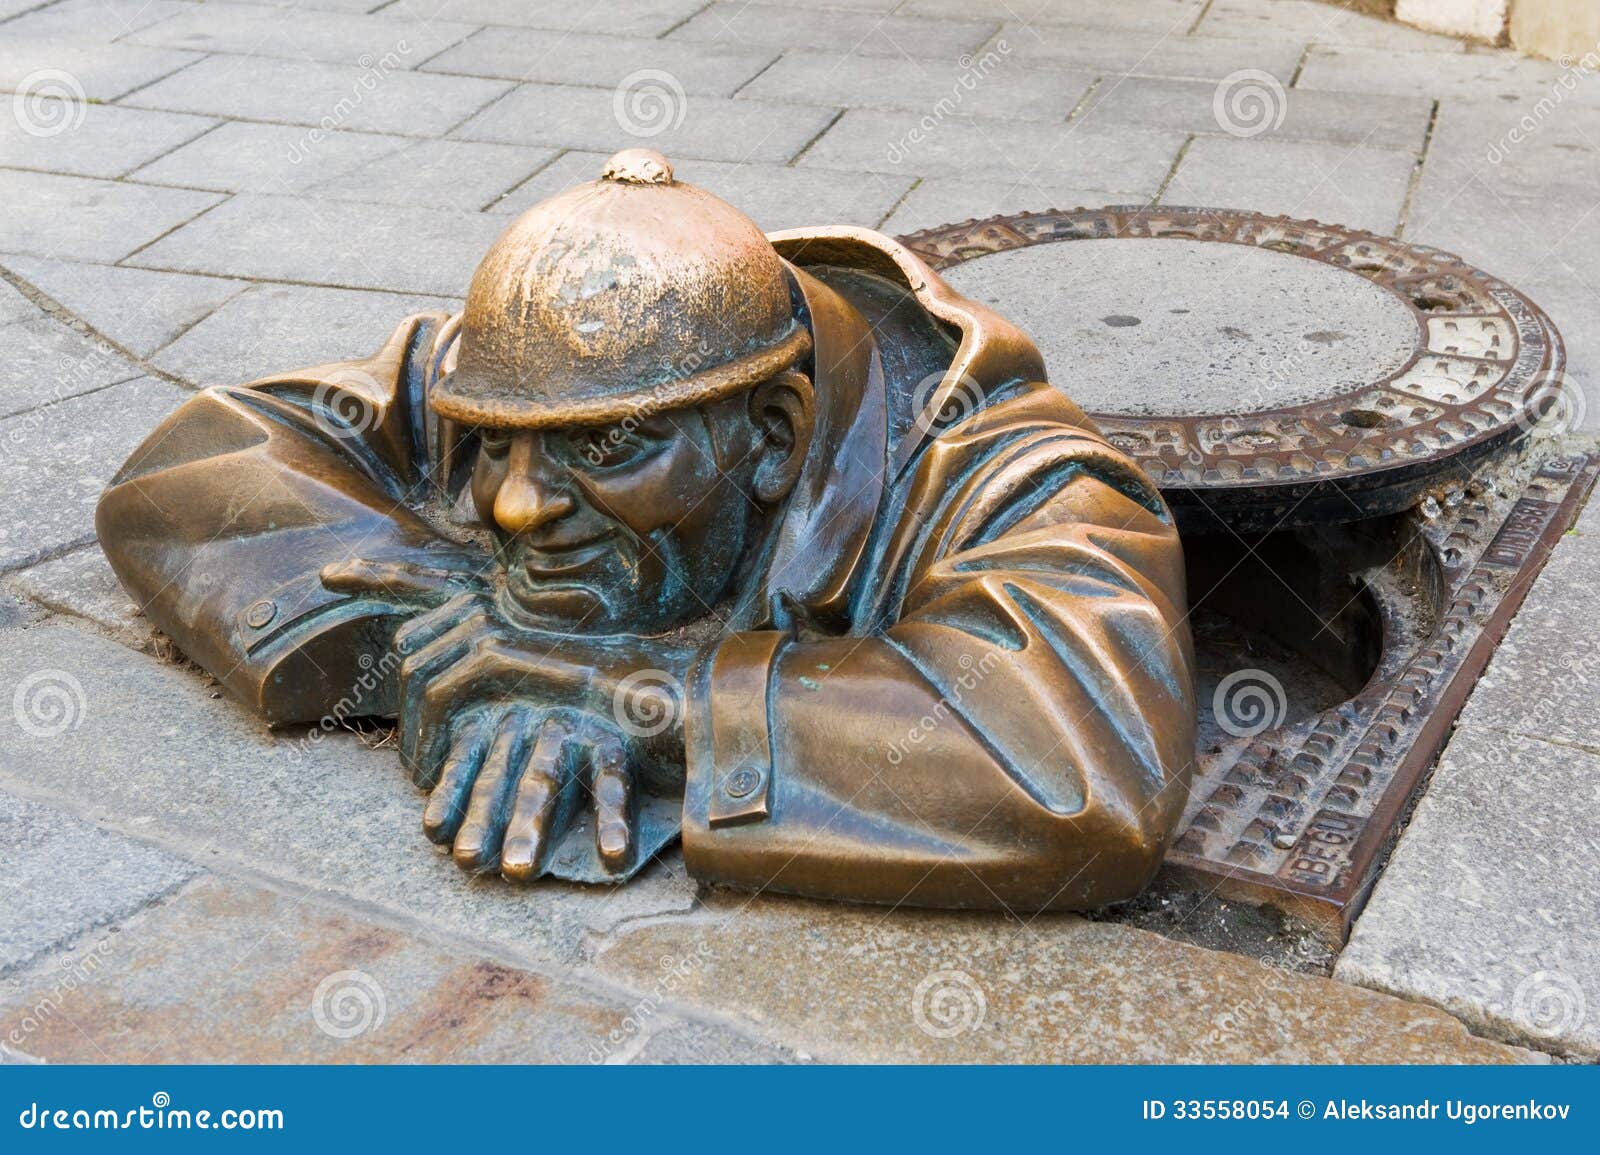 Bronze sculpture called man at work, Bratislava, Slovakia